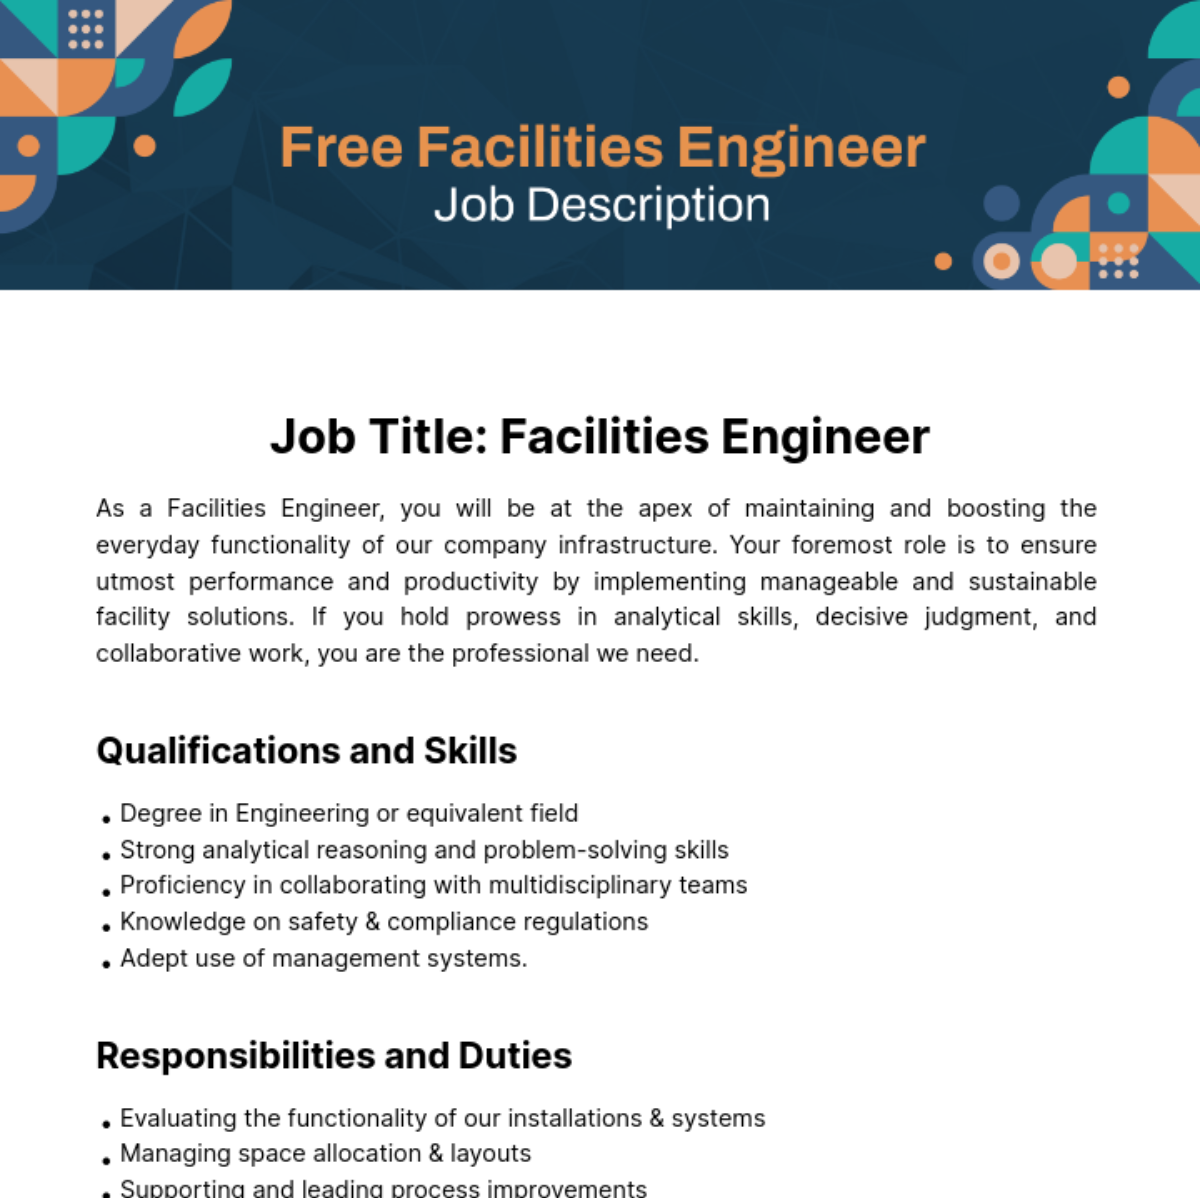 Free Facilities Engineer Job Description Template